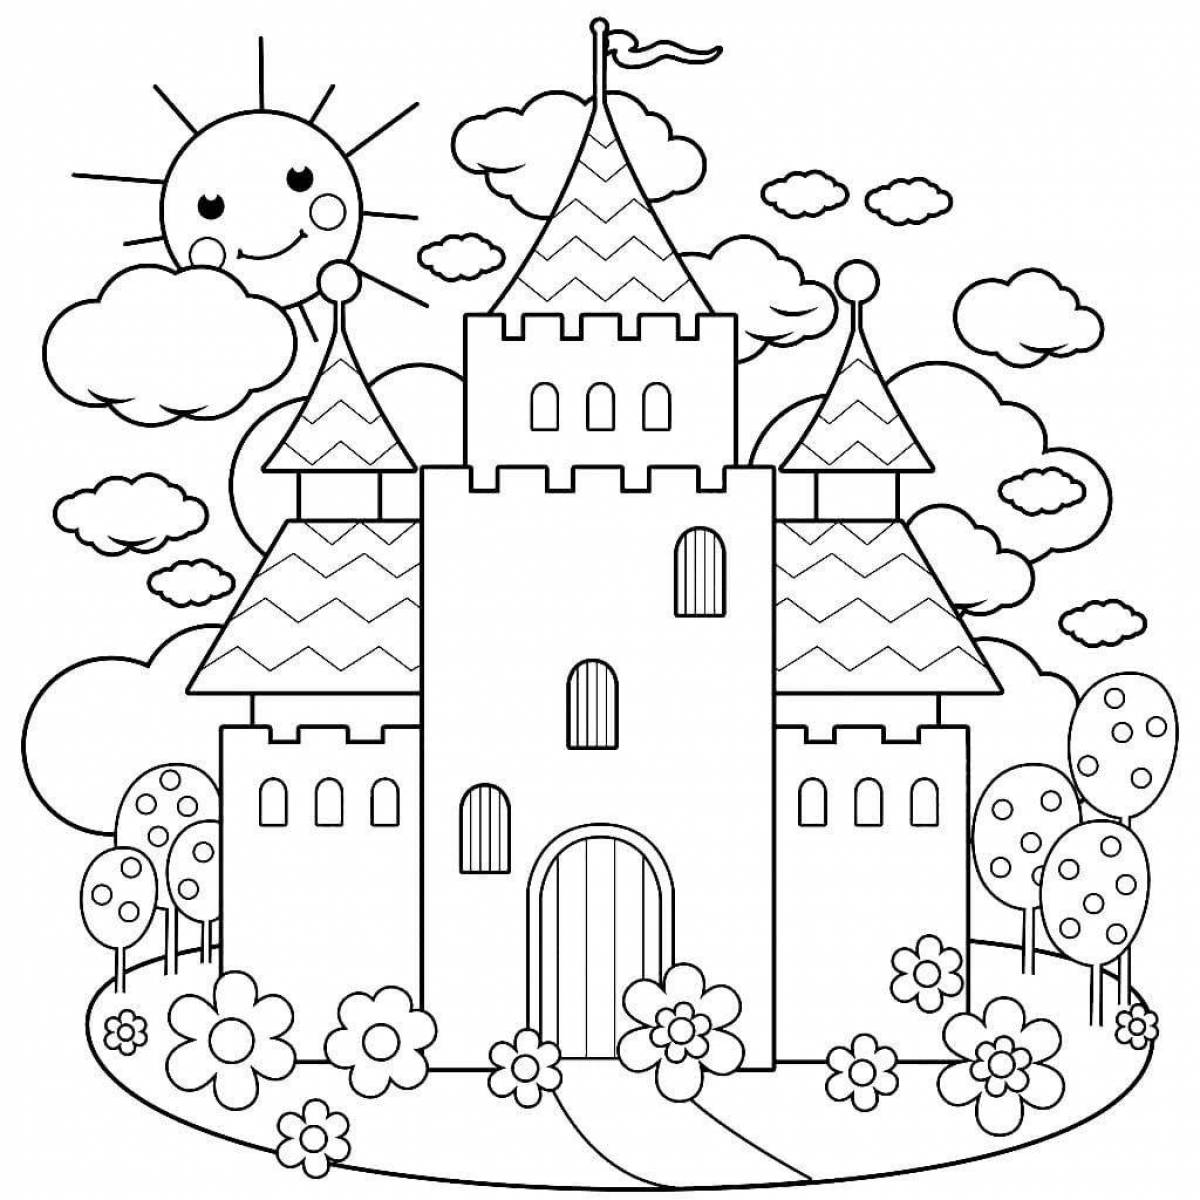 Children's castle coloring book